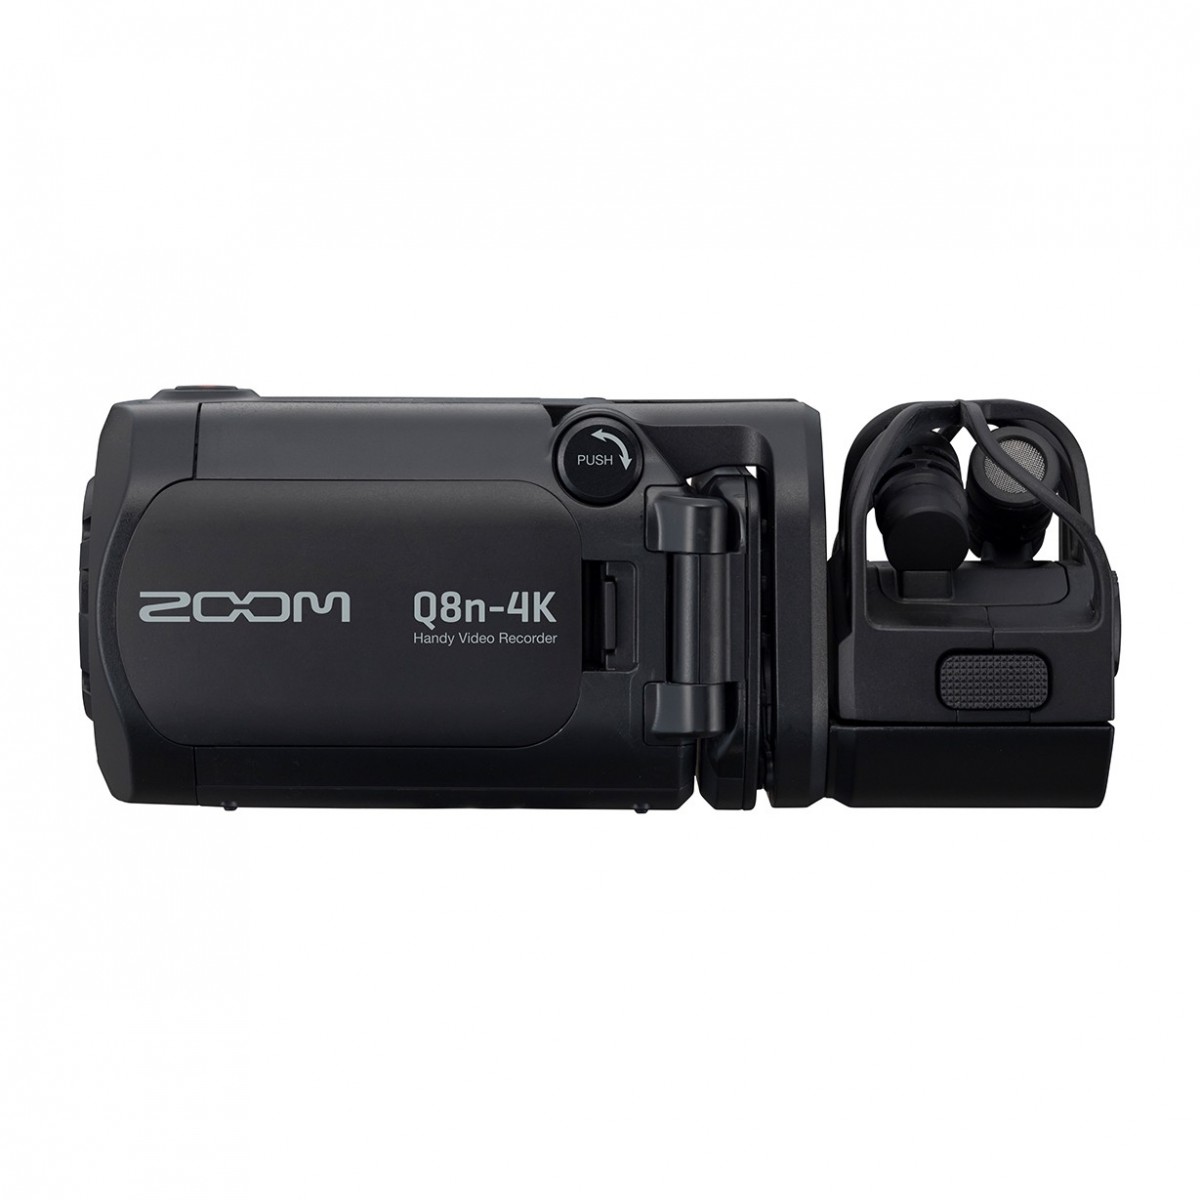 Рекордер Zoom Q8n-4K